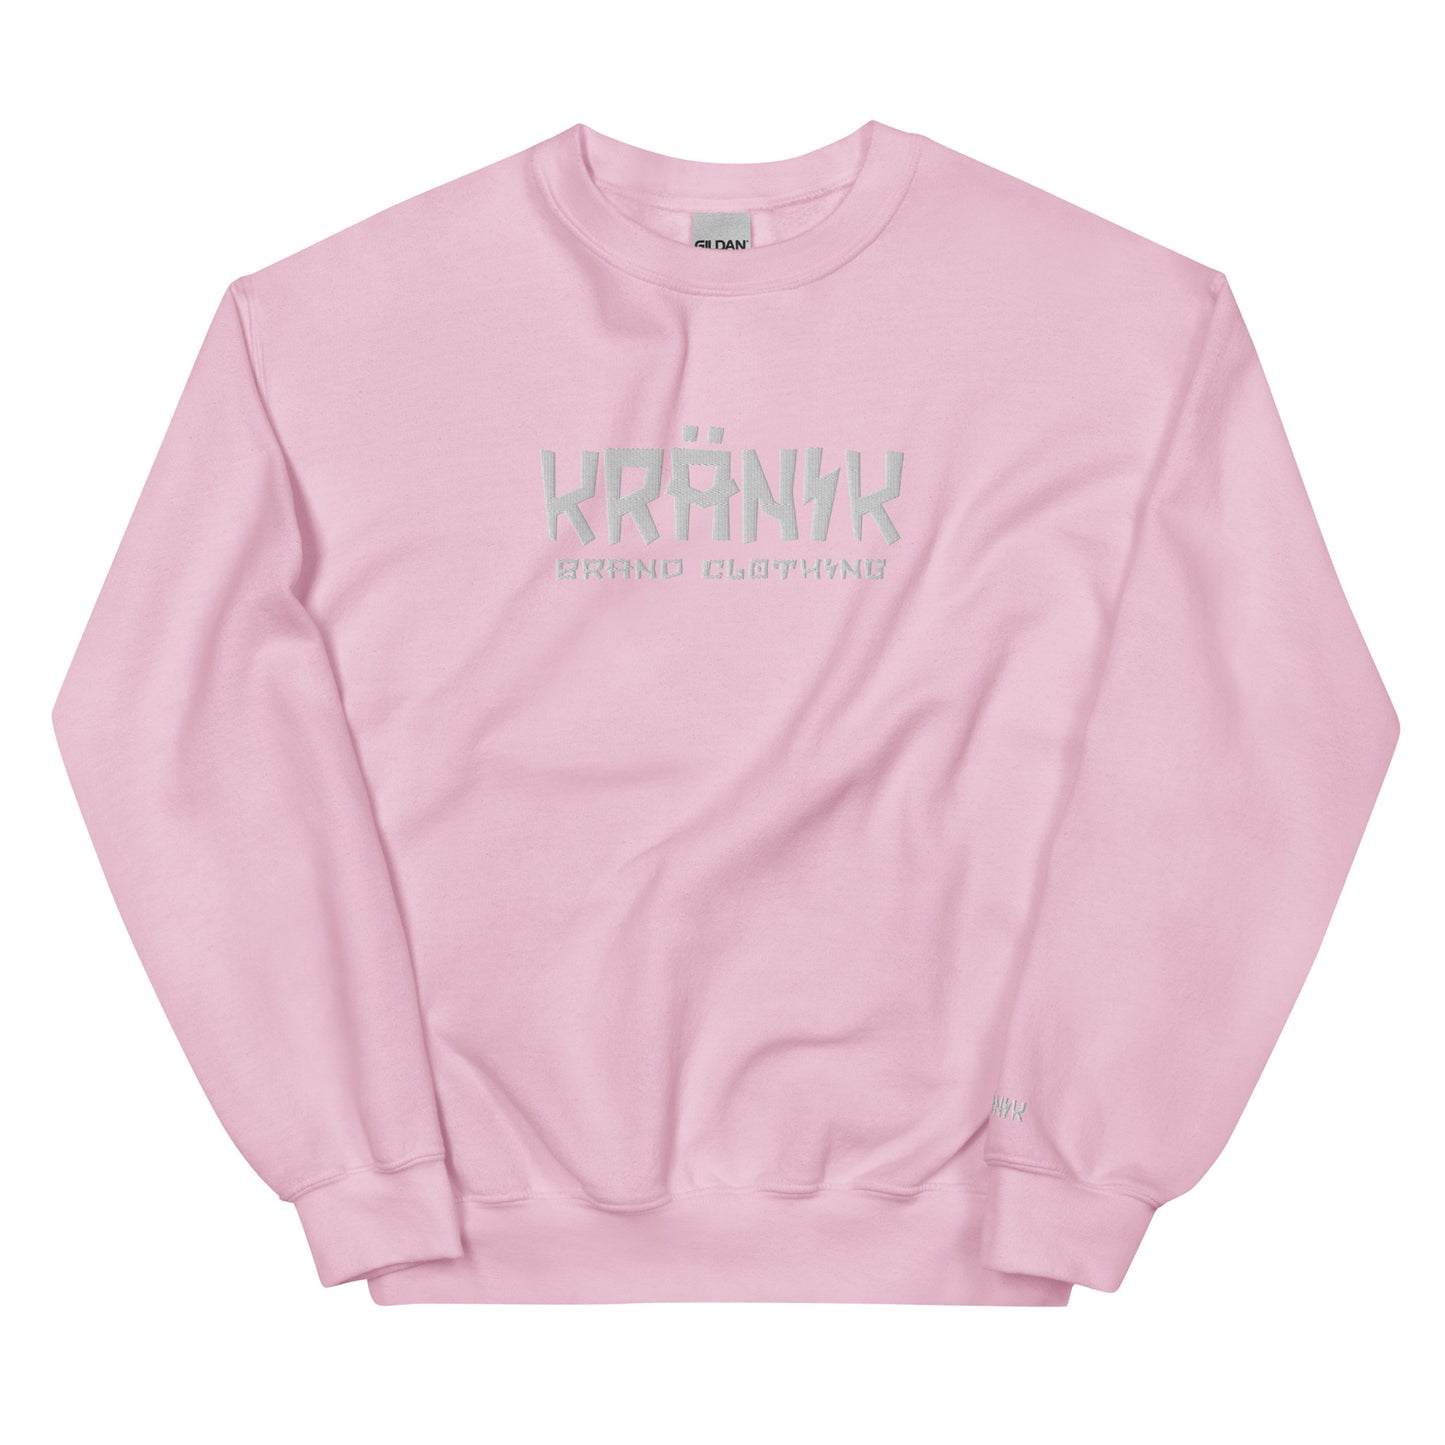 Kranik Brand / Crew / Moto X Logo / Kranik Brand Clothing / Embroidered